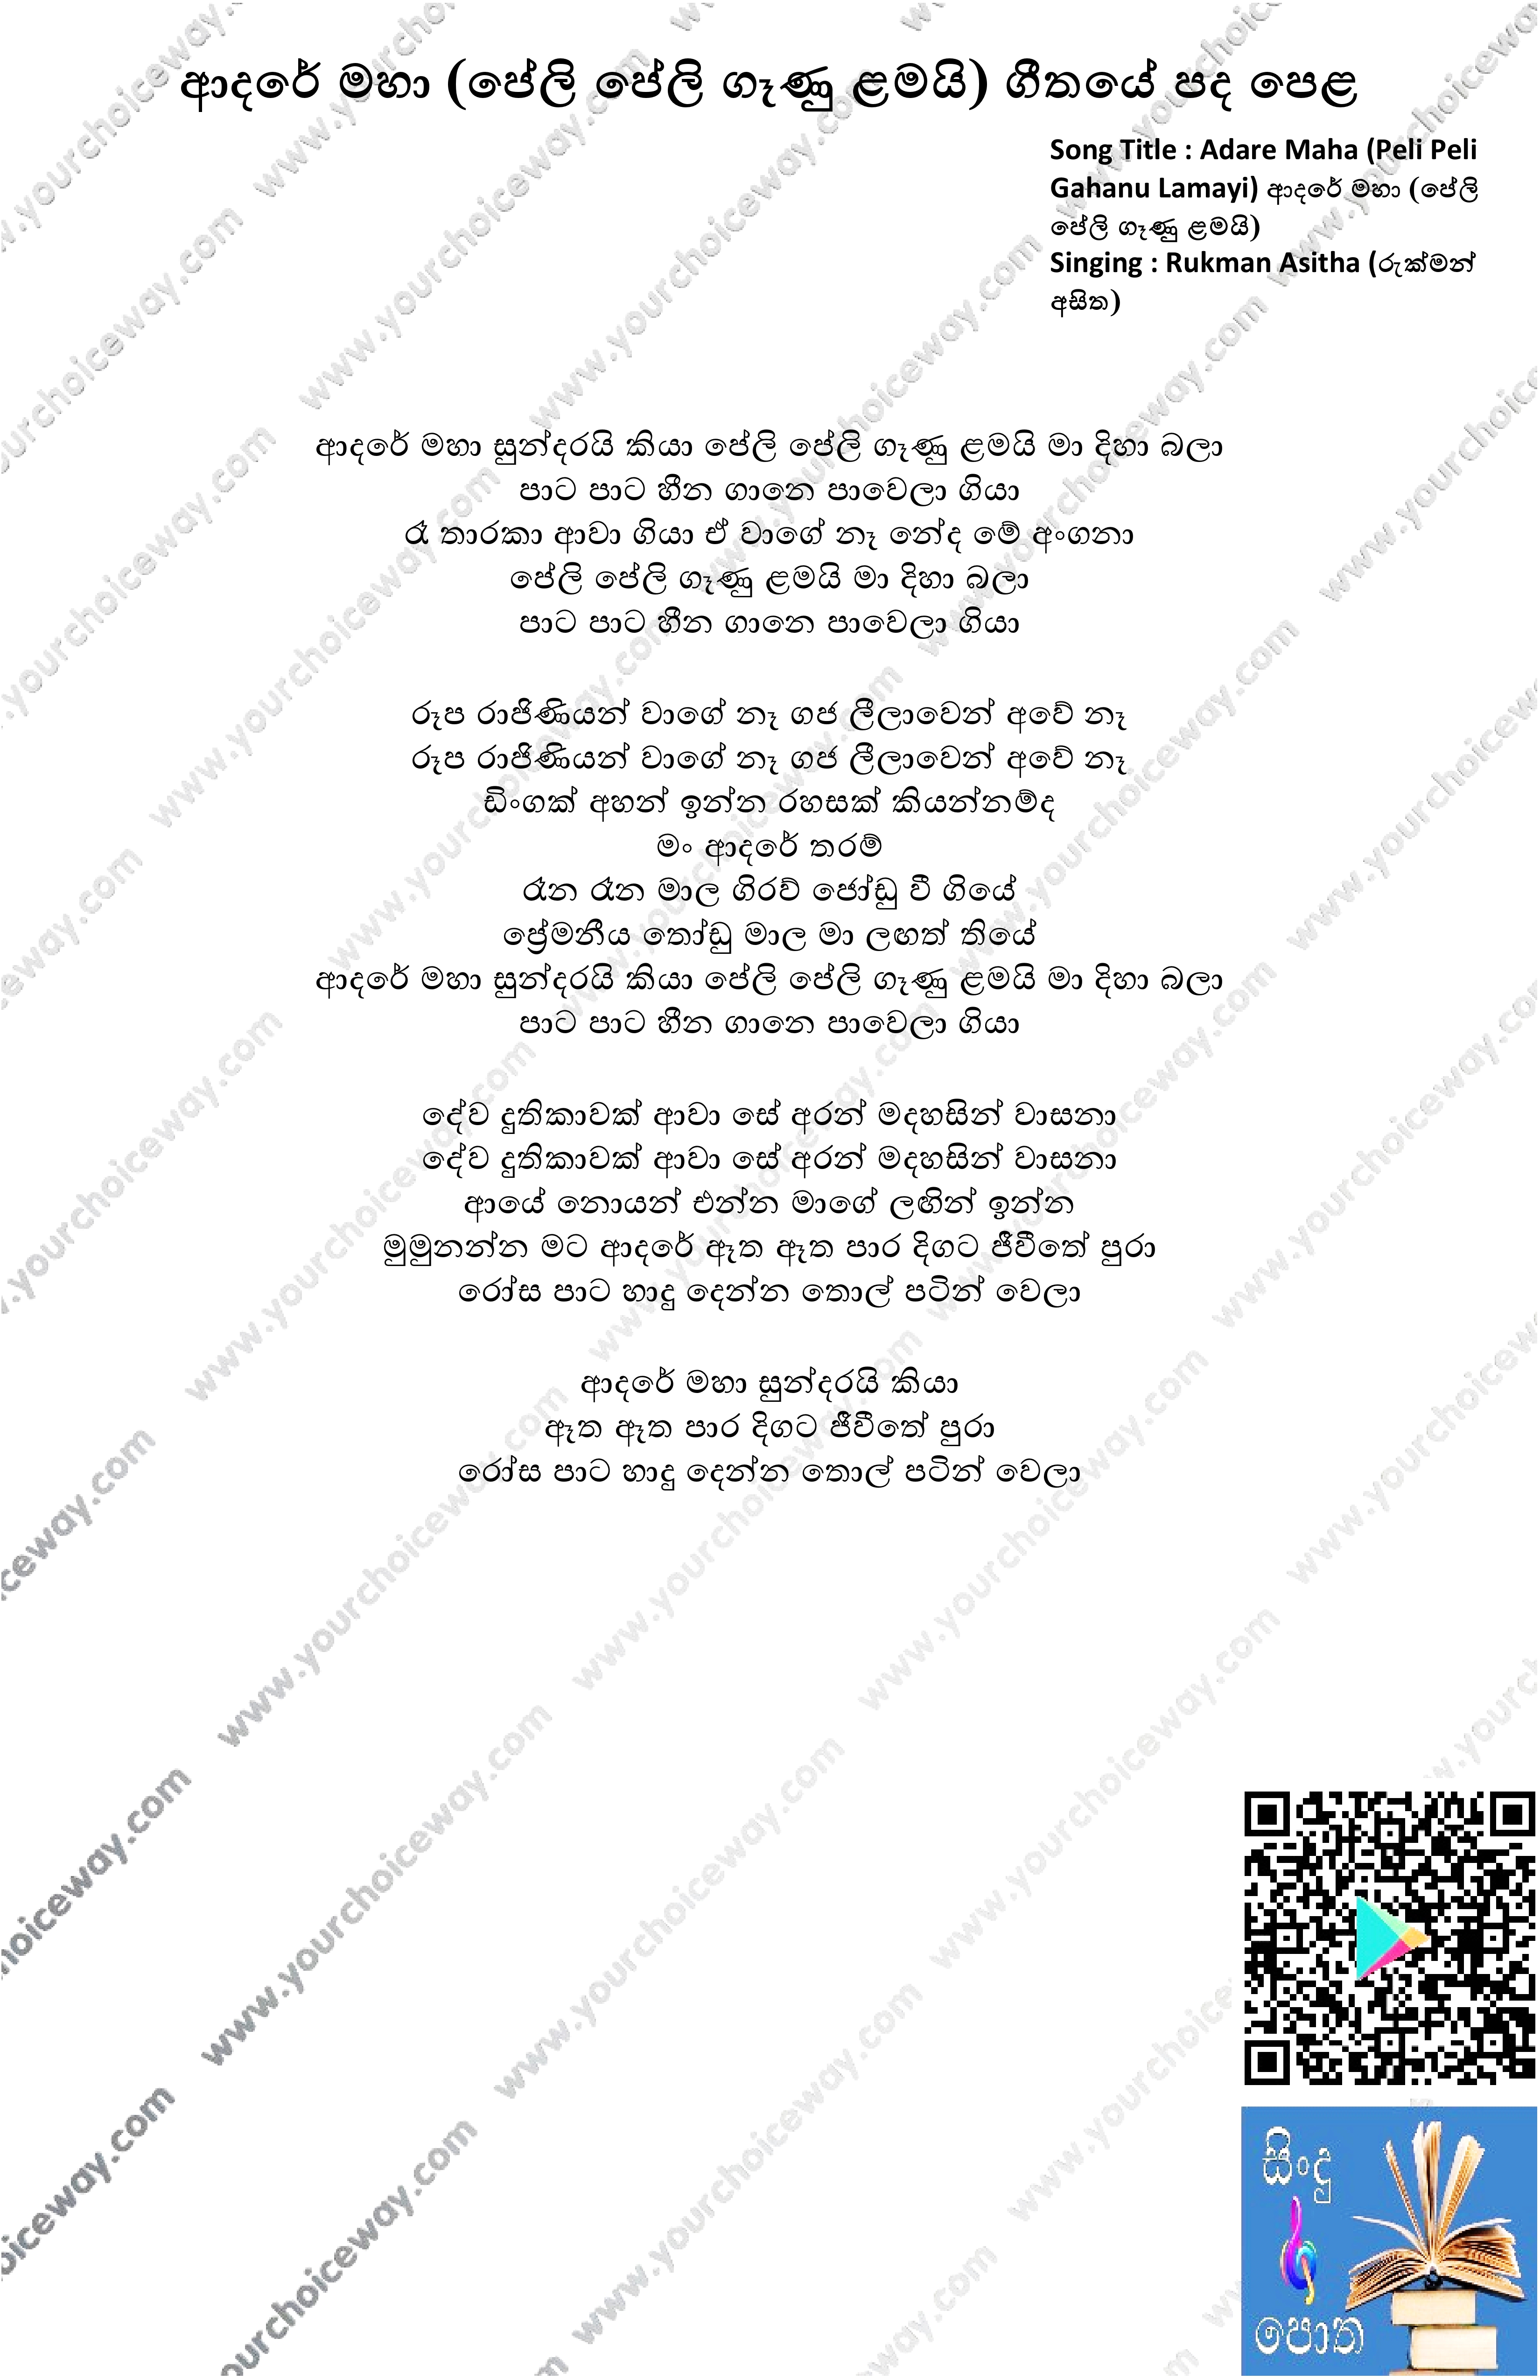 Adare Maha (Peli Peli Gahanu Lamayi) Song Lyrics - ආදරේ මහා (පේලි පේලි ගෑණු ළමයි) ගීතයේ පද පෙළ